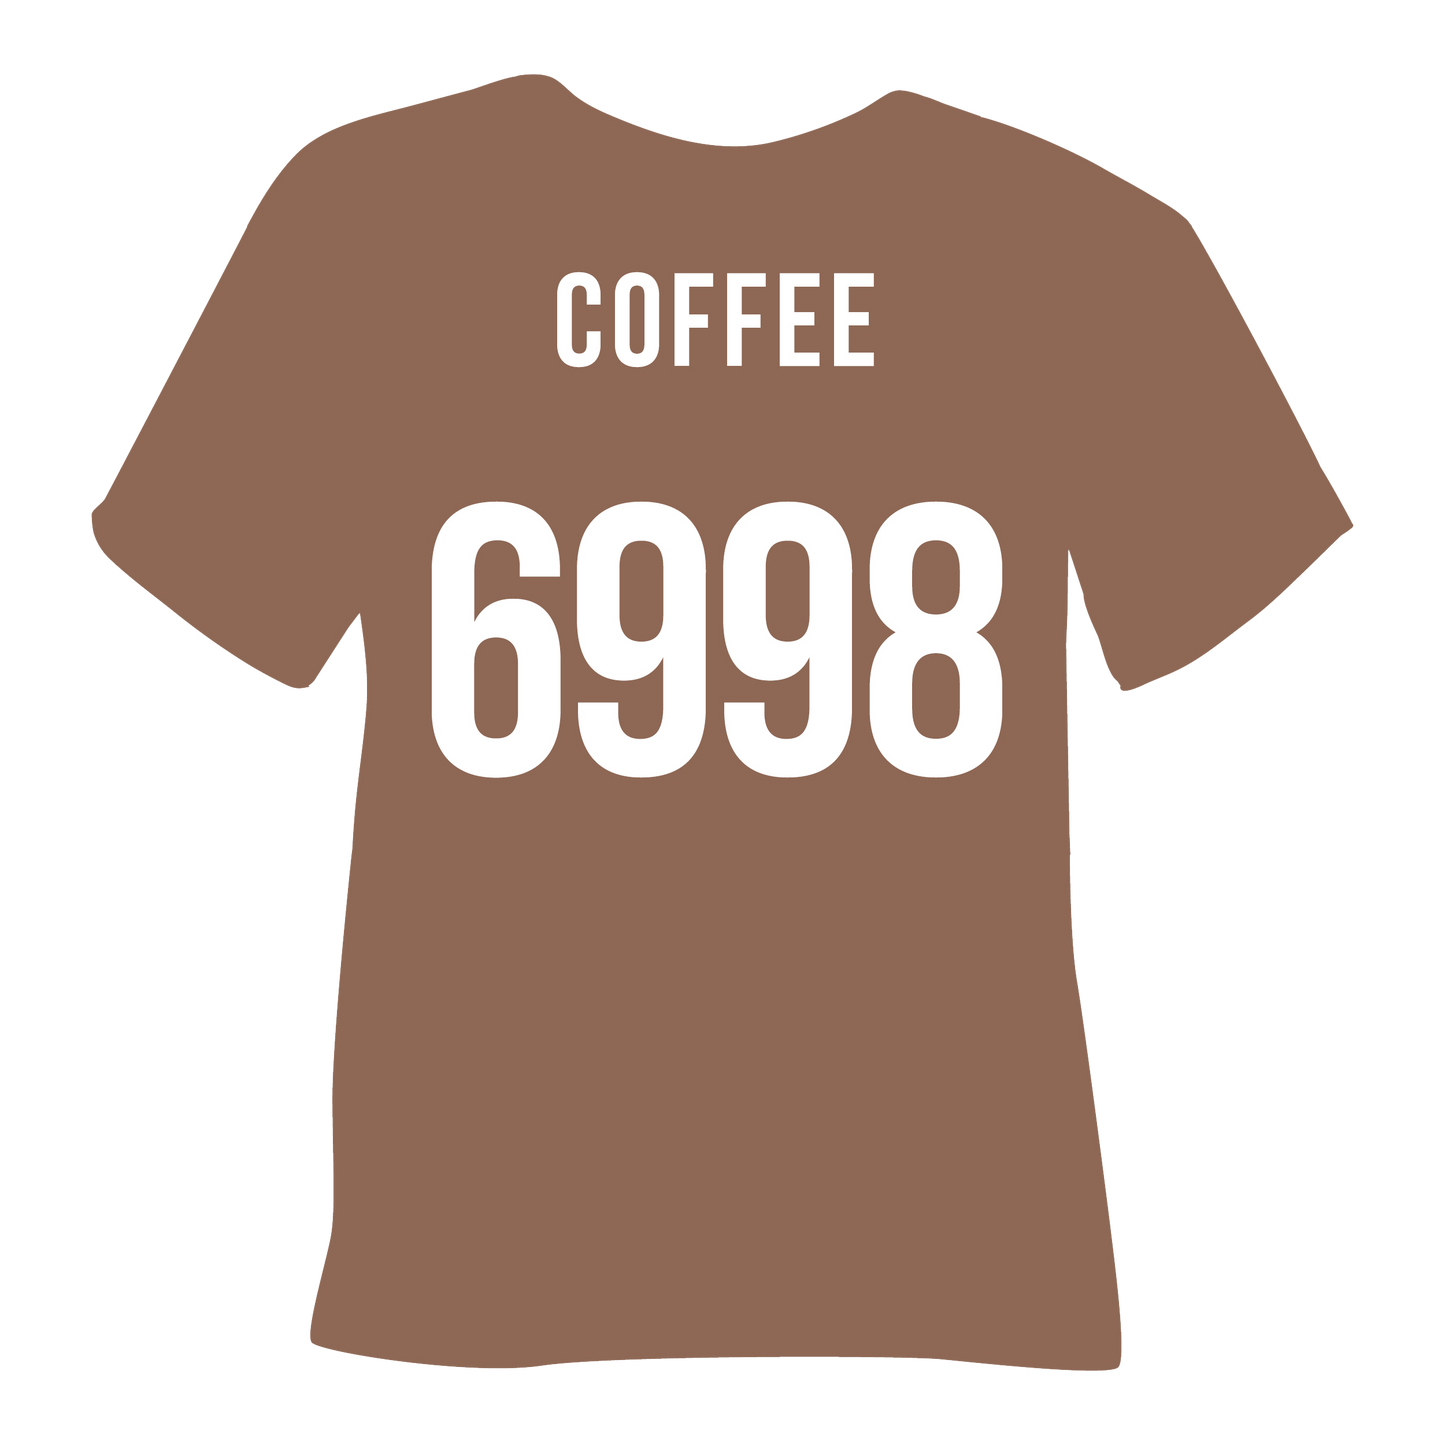 POLI-FLEX TURBO "COFFEE" 6998 A4 FORMATWARE